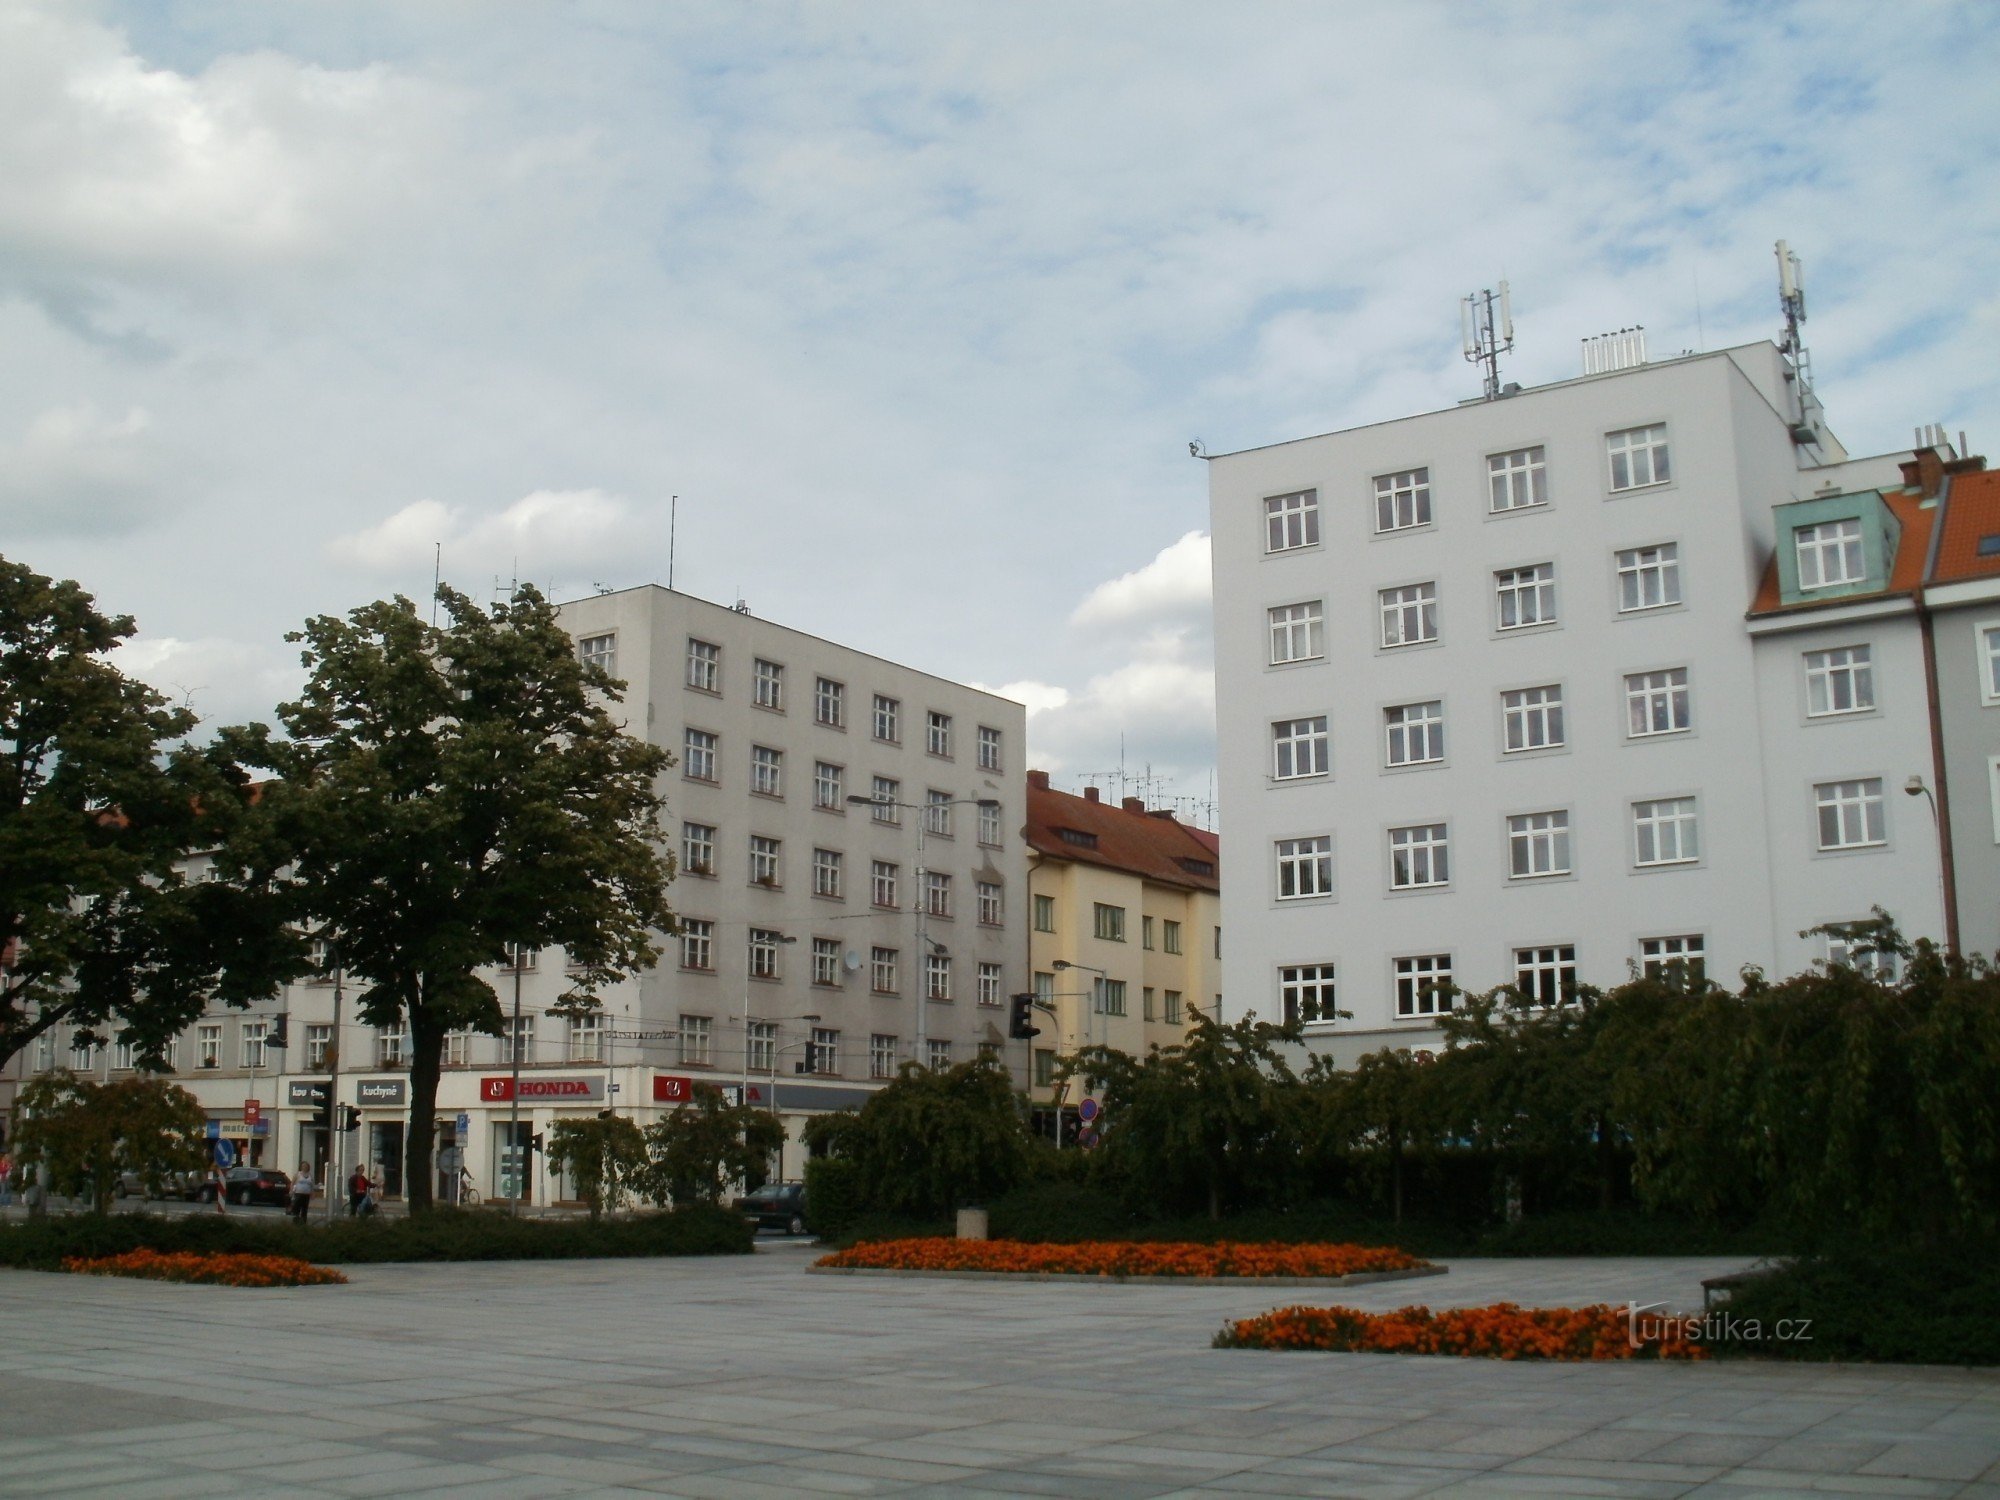 Hradec Králové - Quảng trường Ulrich